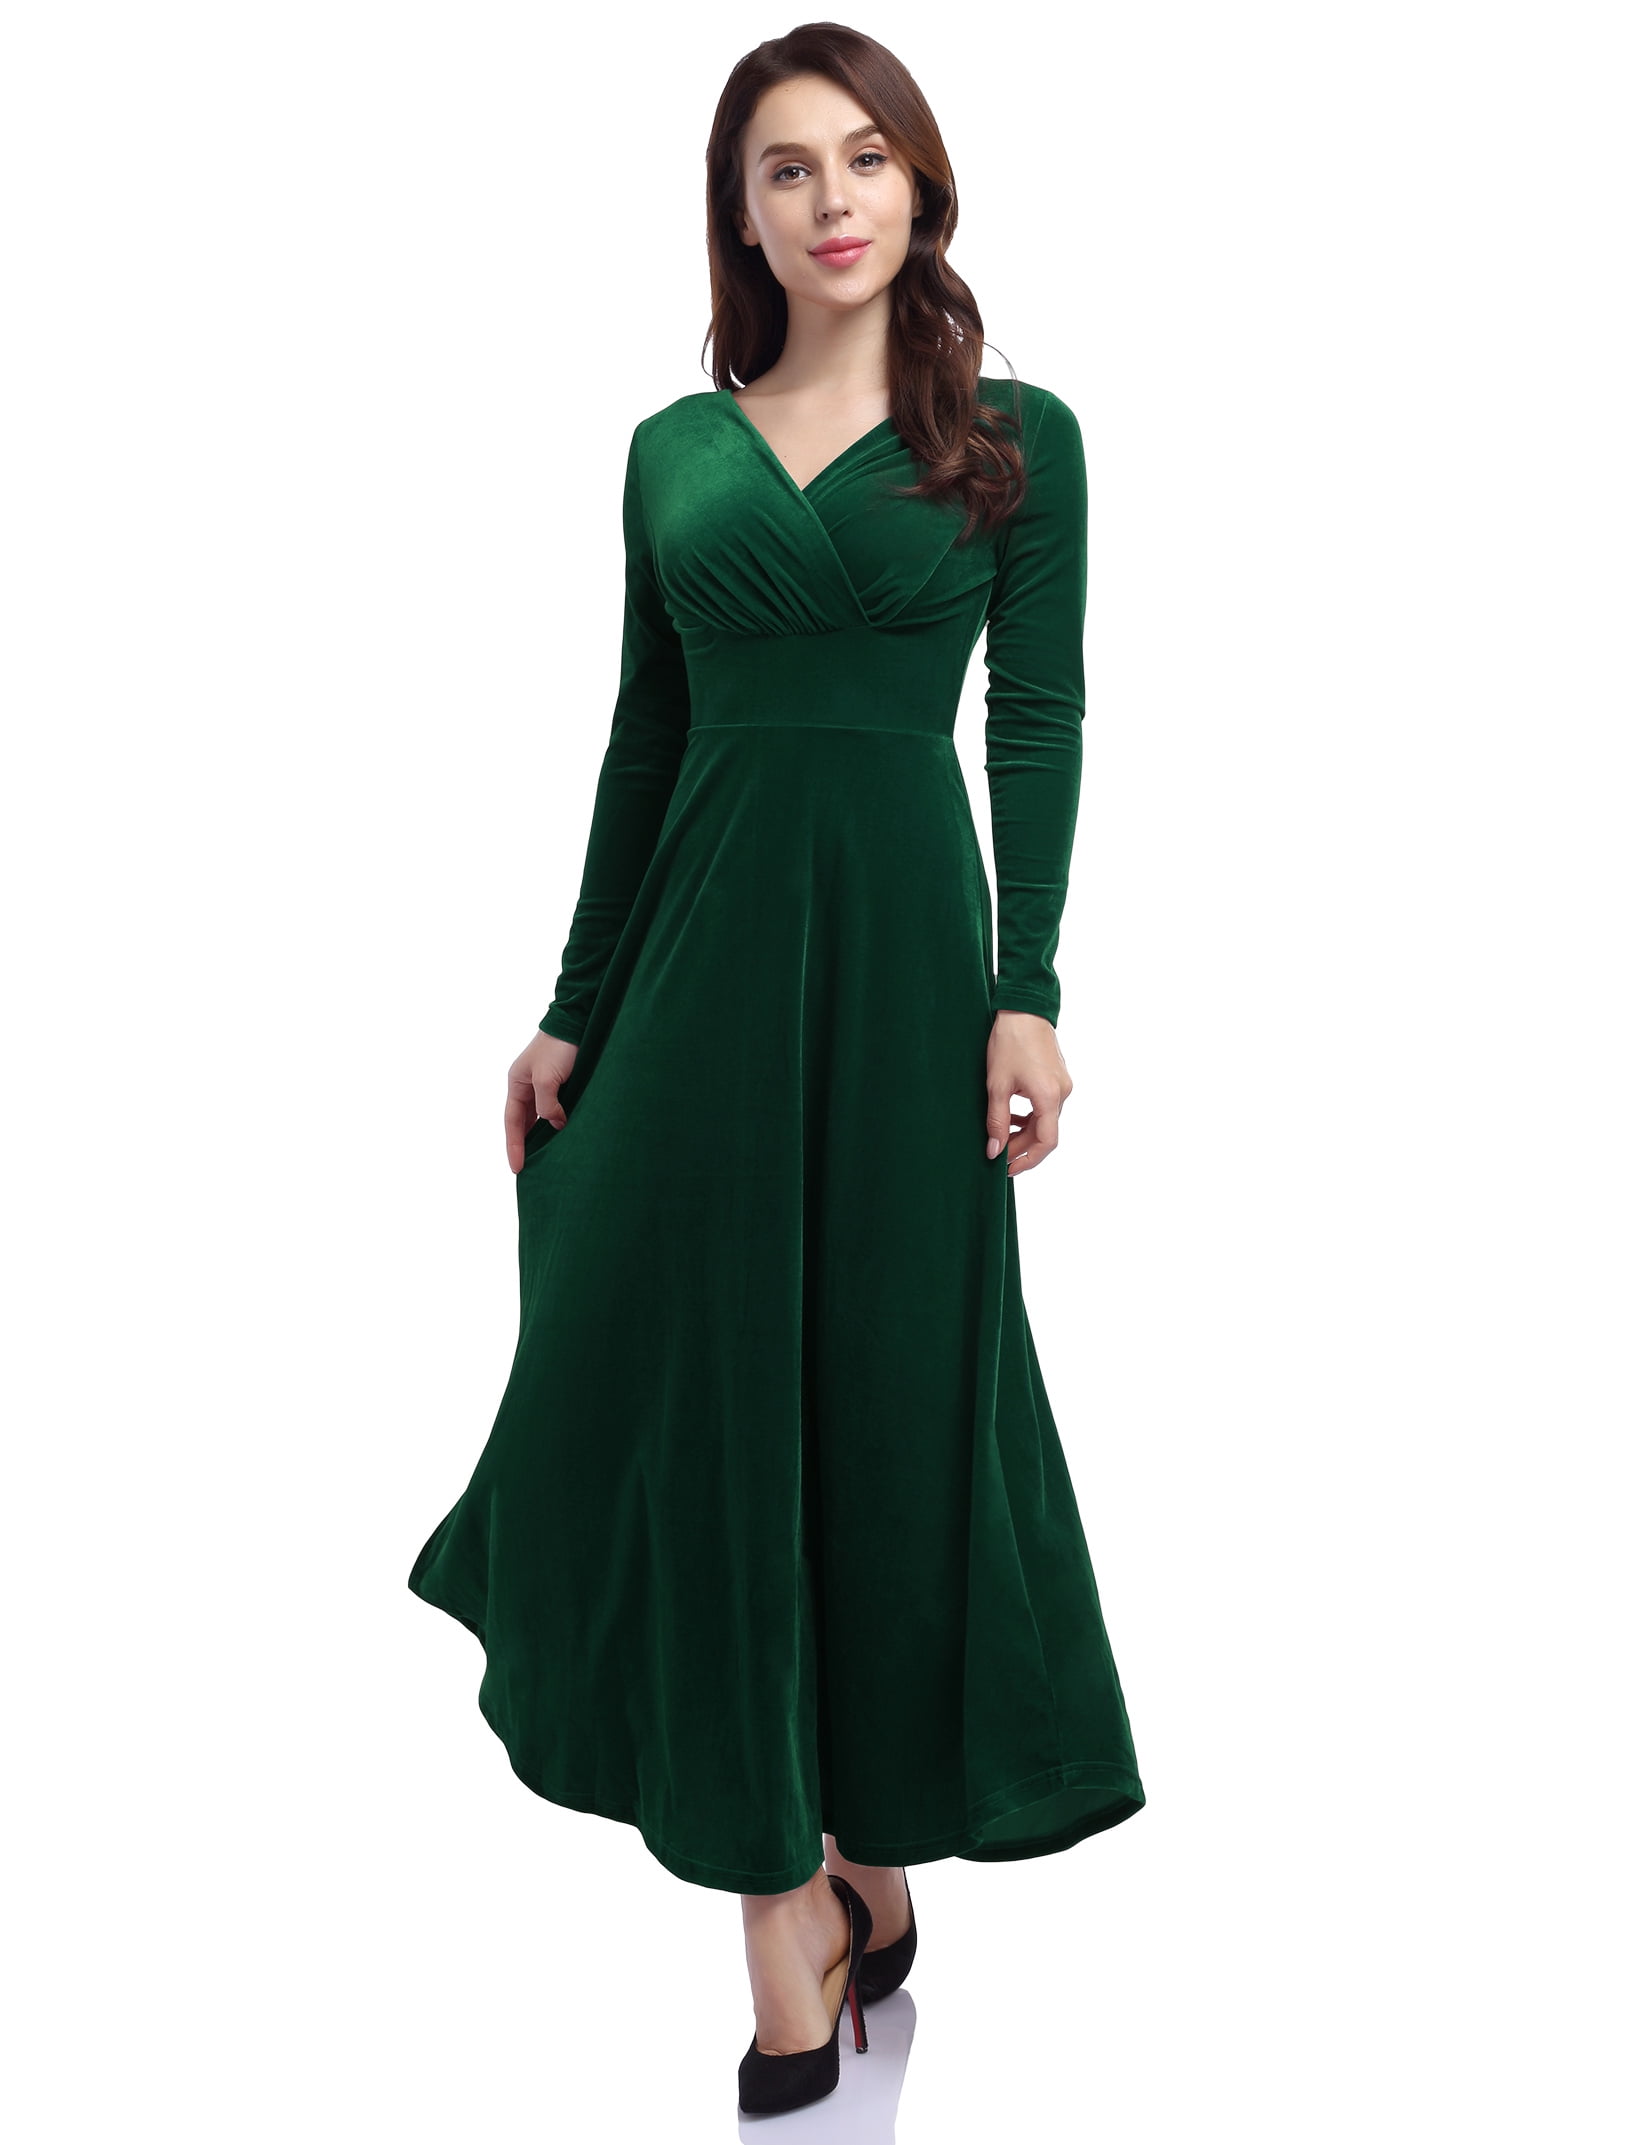 Kitsin Women's Velvet Holiday Party Gowns Maxi Dress - Walmart.com